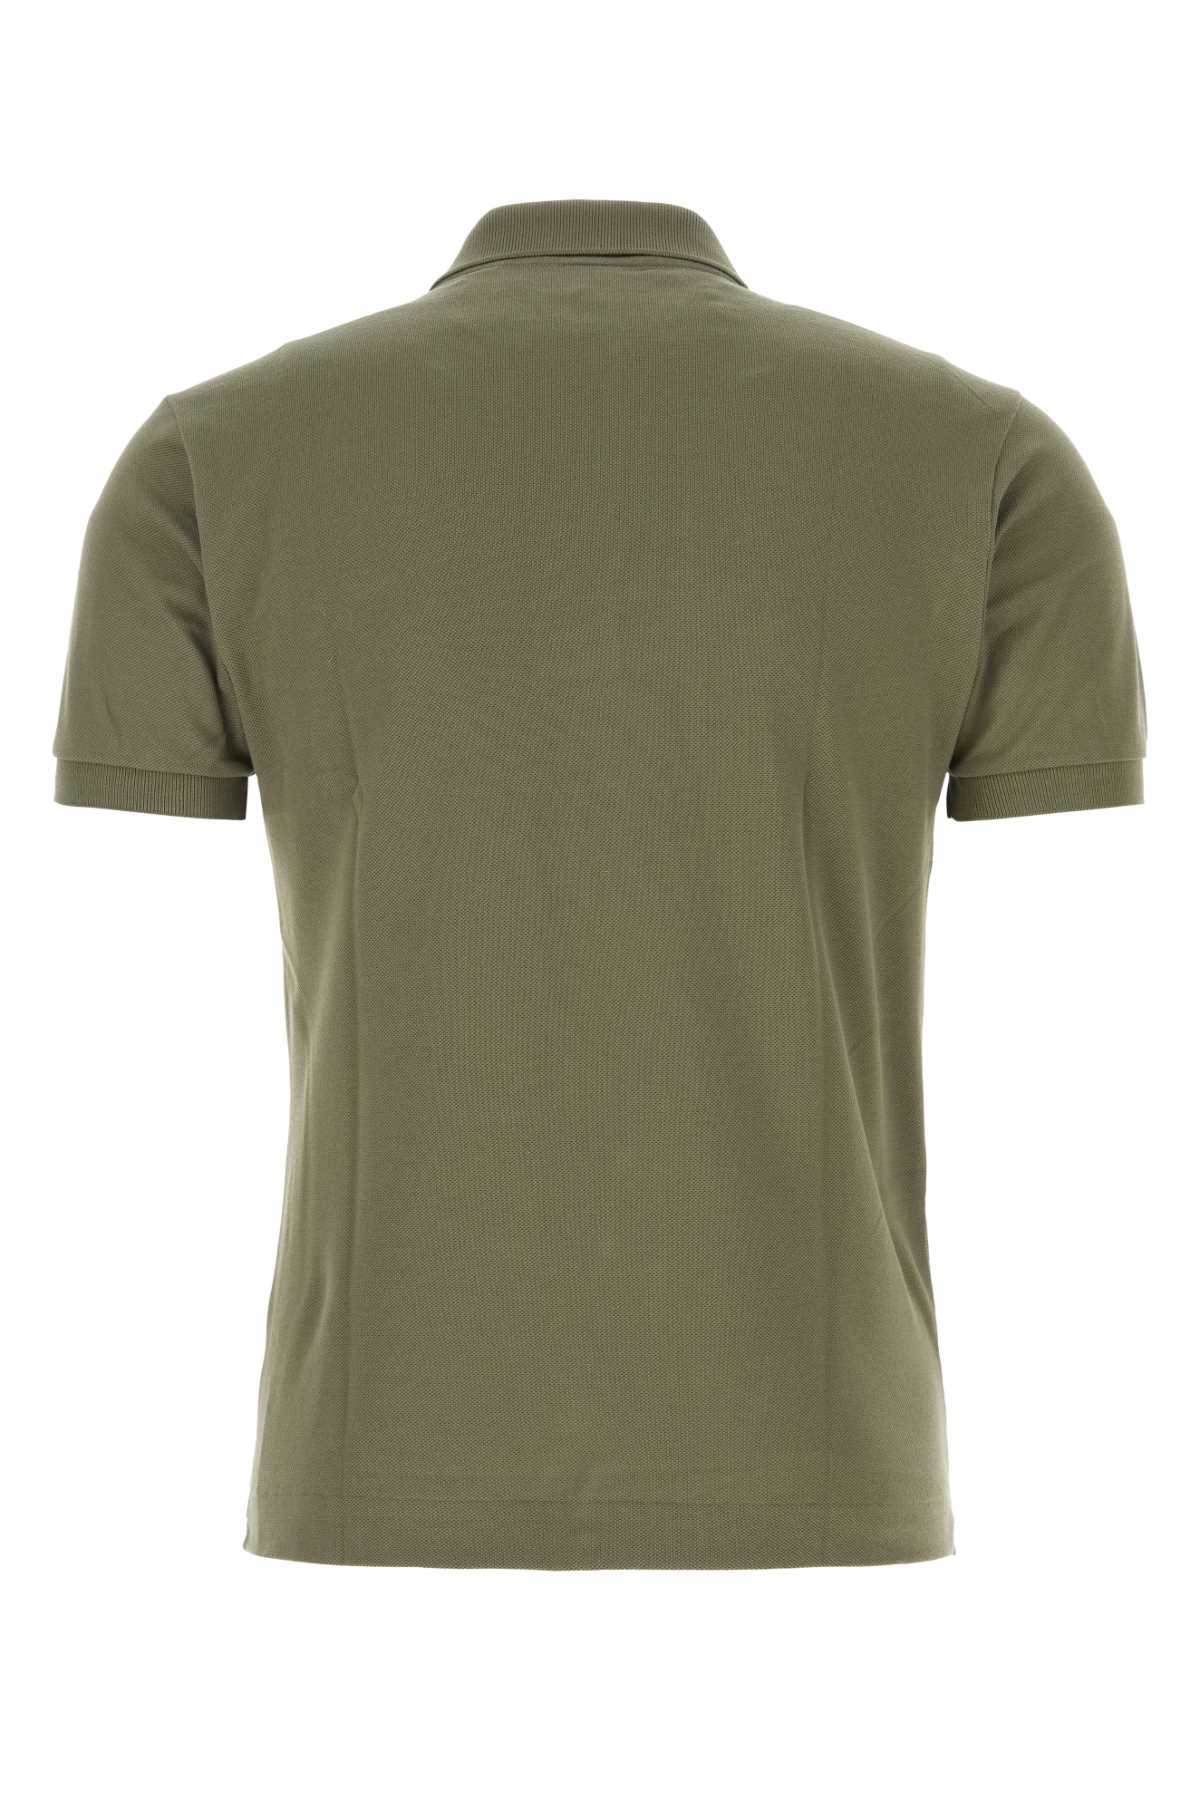 Lacoste Army Green Piquet Polo Shirt In 316